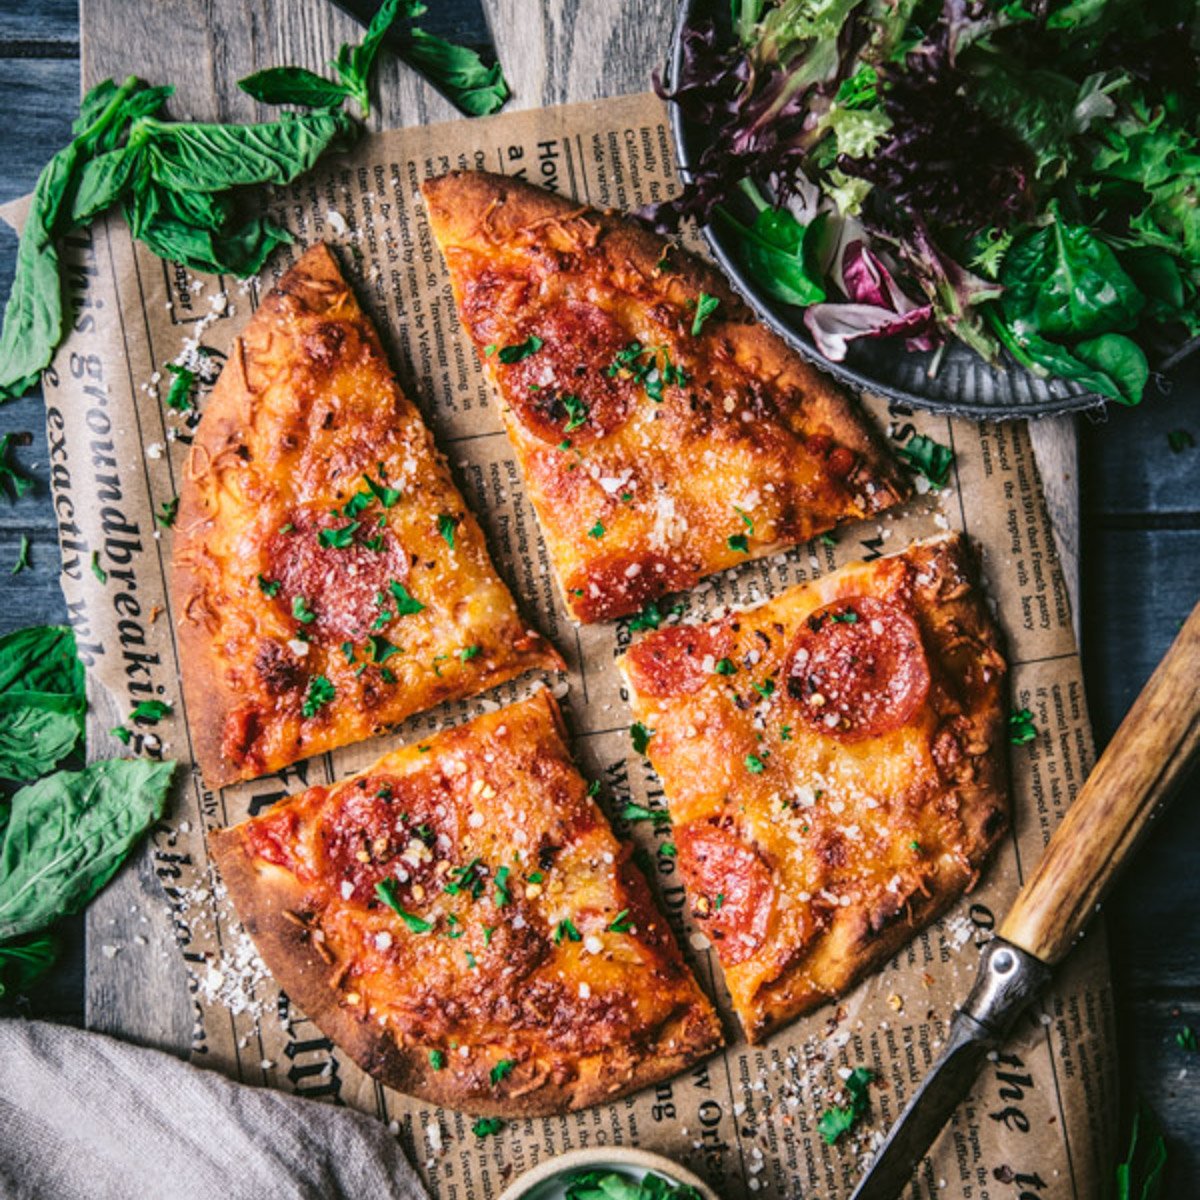 https://www.theseasonedmom.com/wp-content/uploads/2022/06/Flatbread-Pizza-Featured.jpg